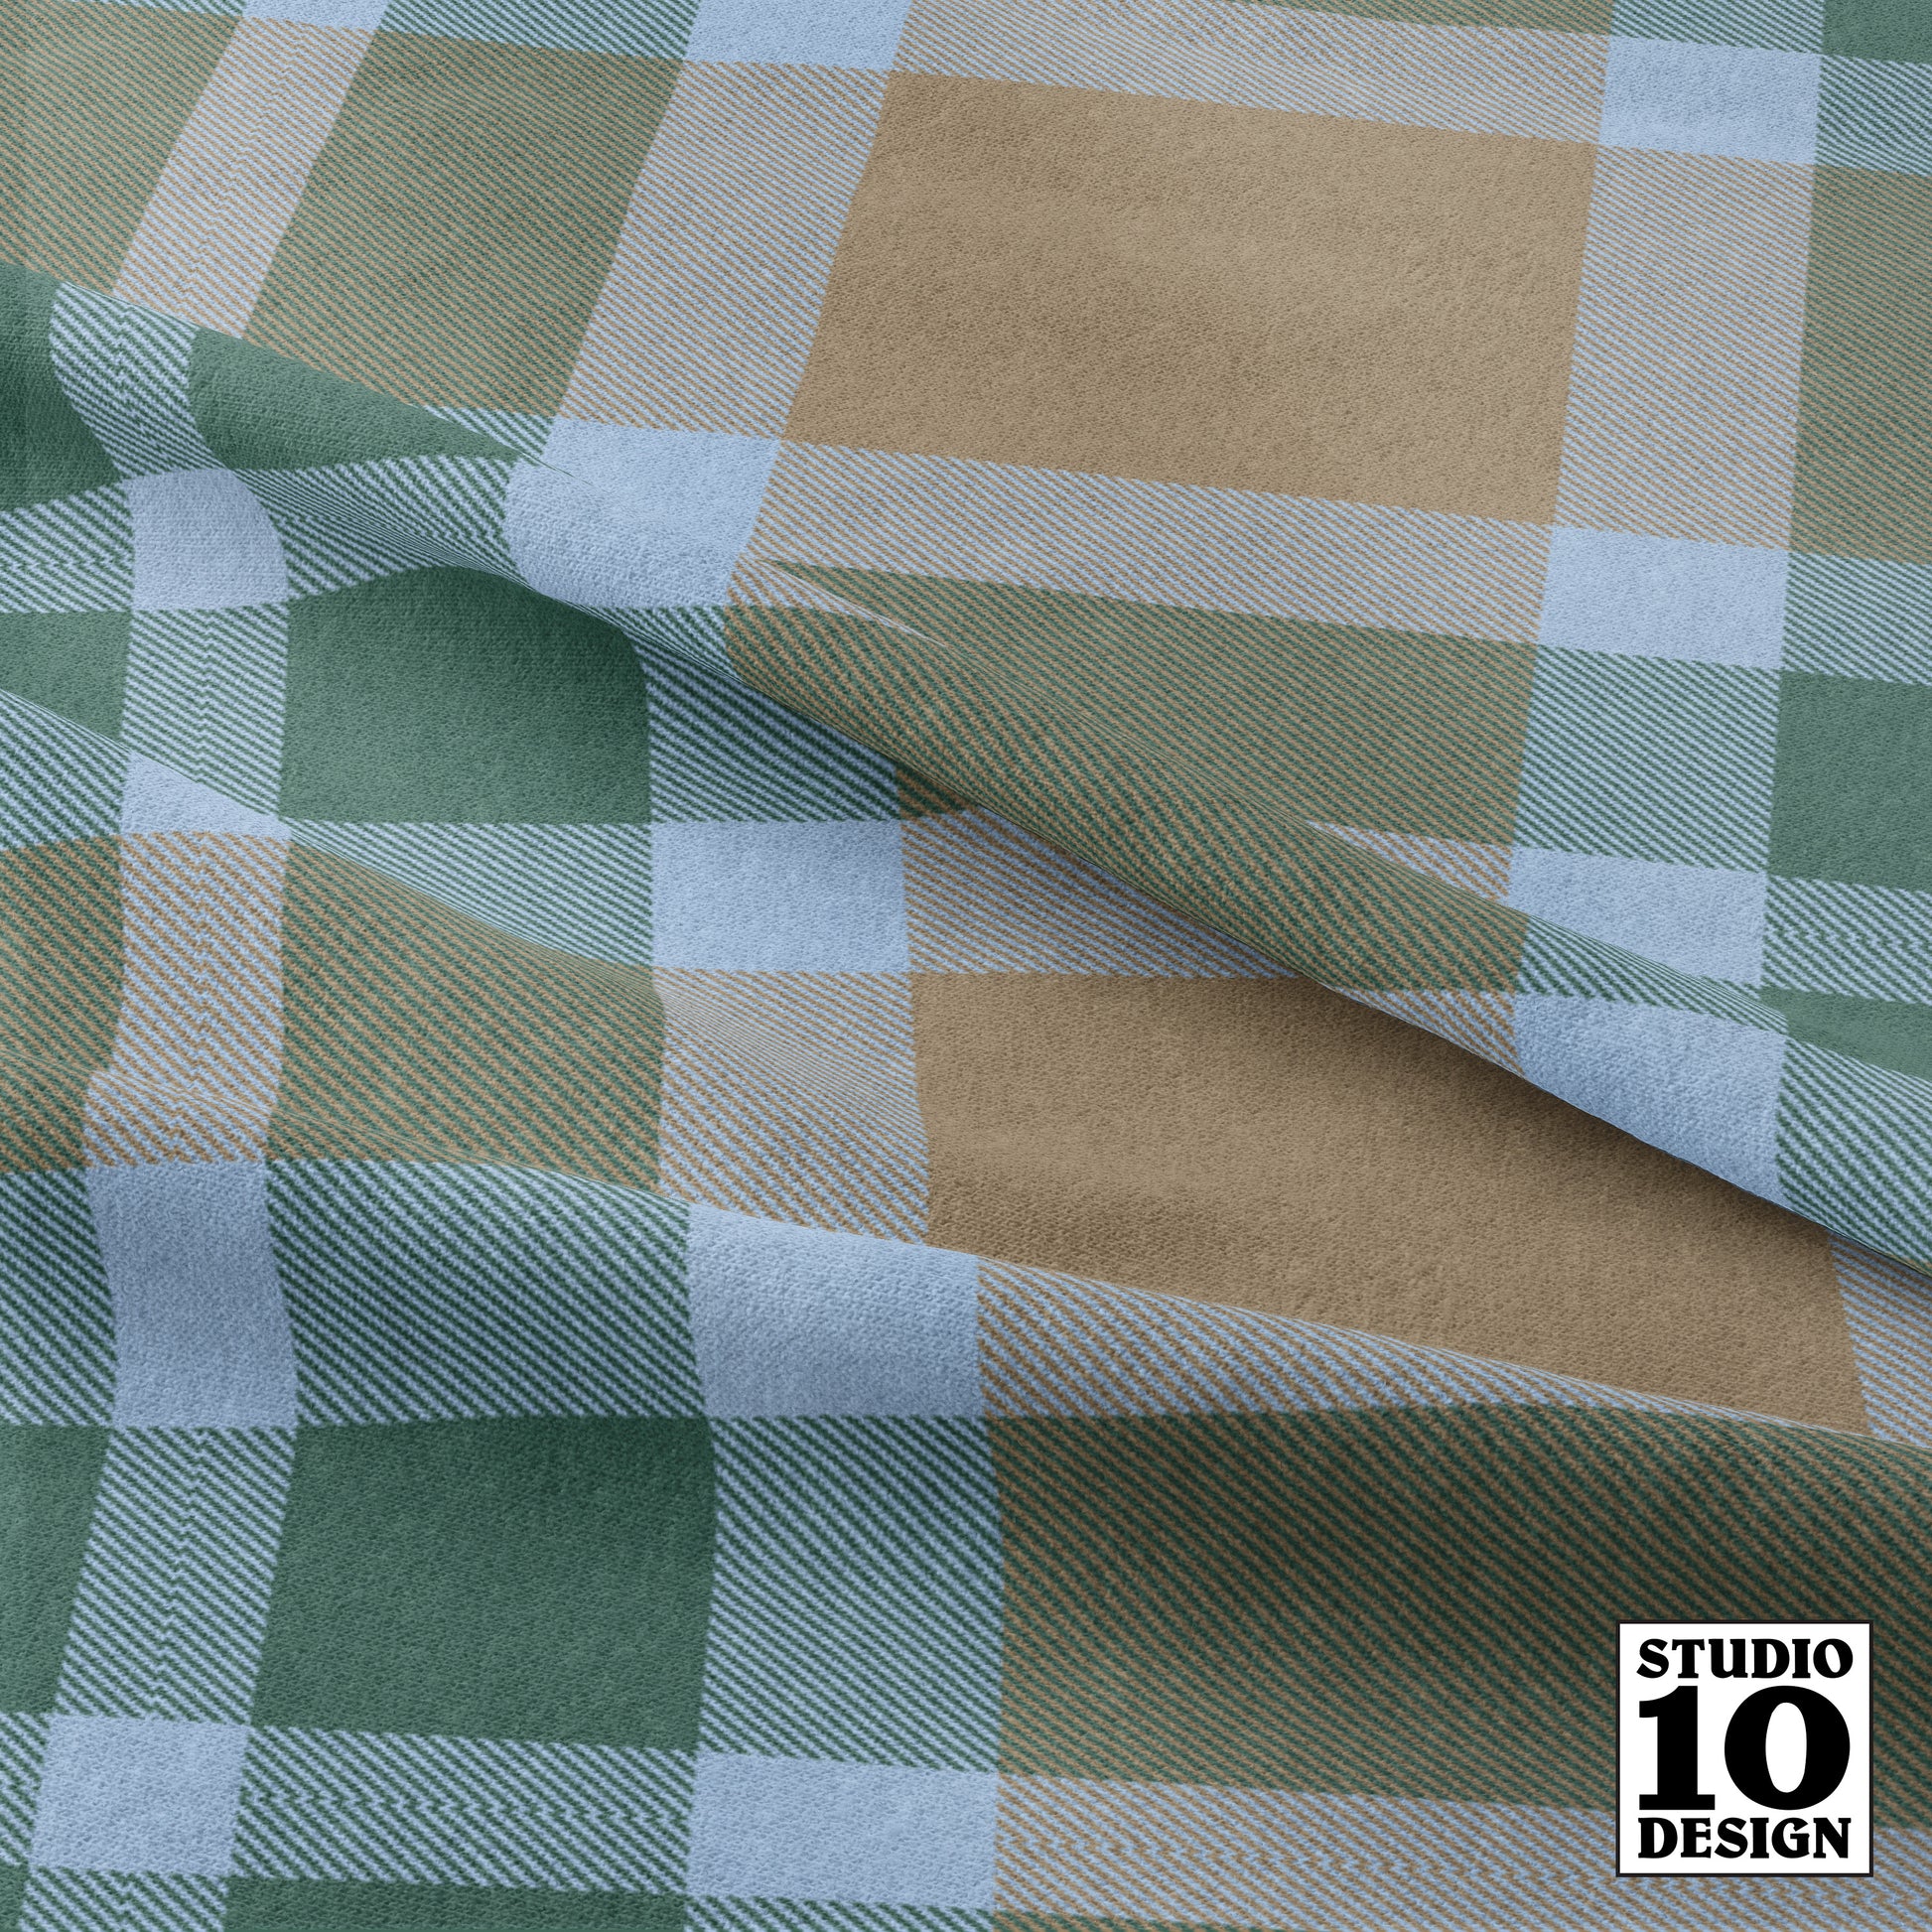 Calm Tartan Printed Fabric by Studio Ten Design